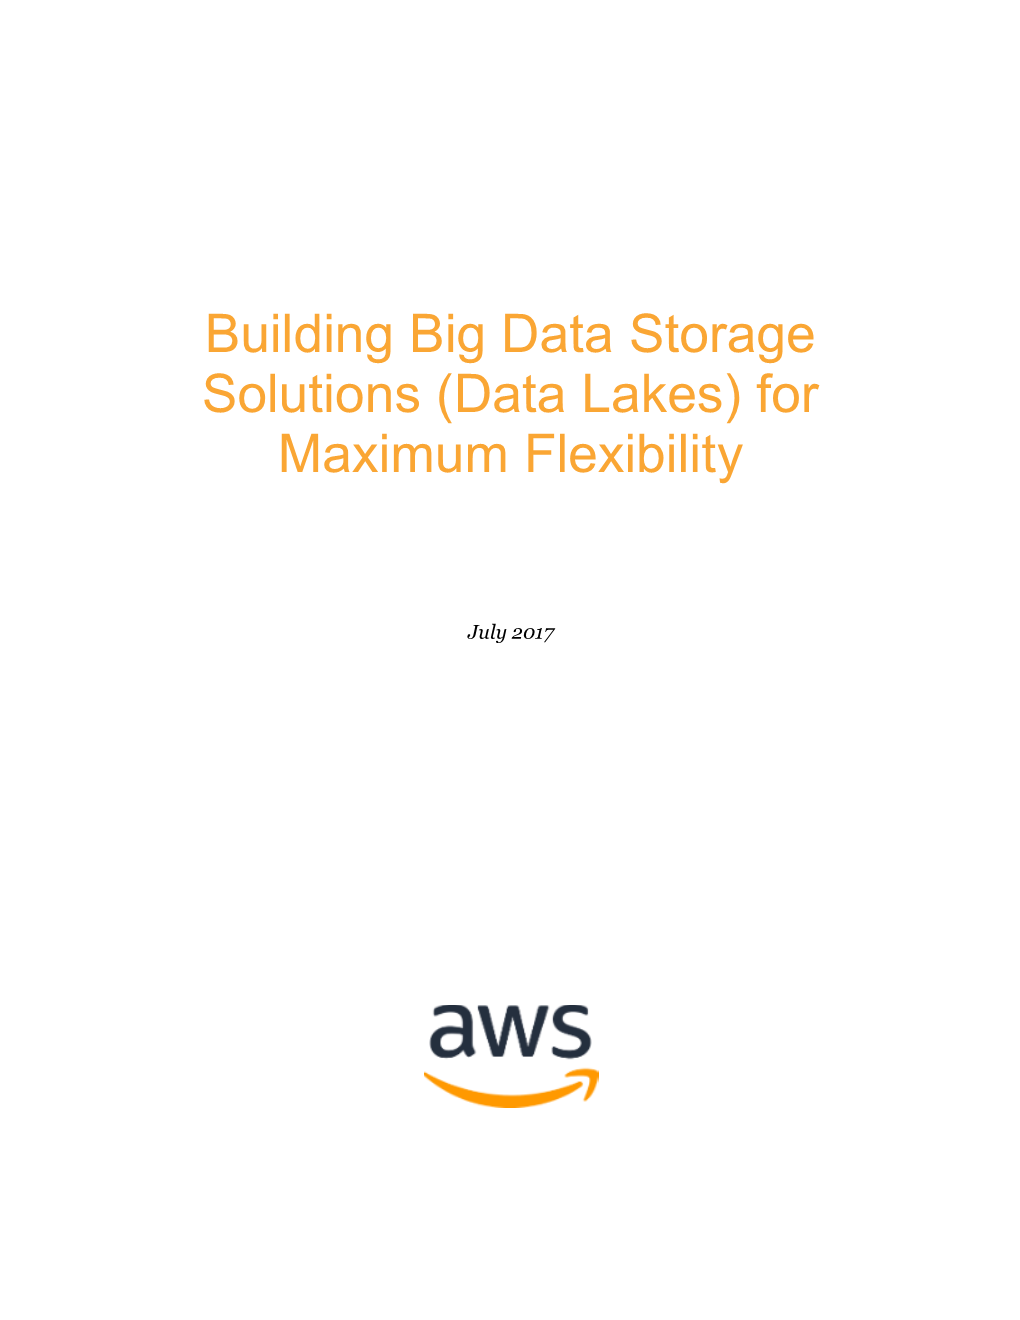 Building Big Data Storage Solutions (Data Lakes) for Maximum Flexibility